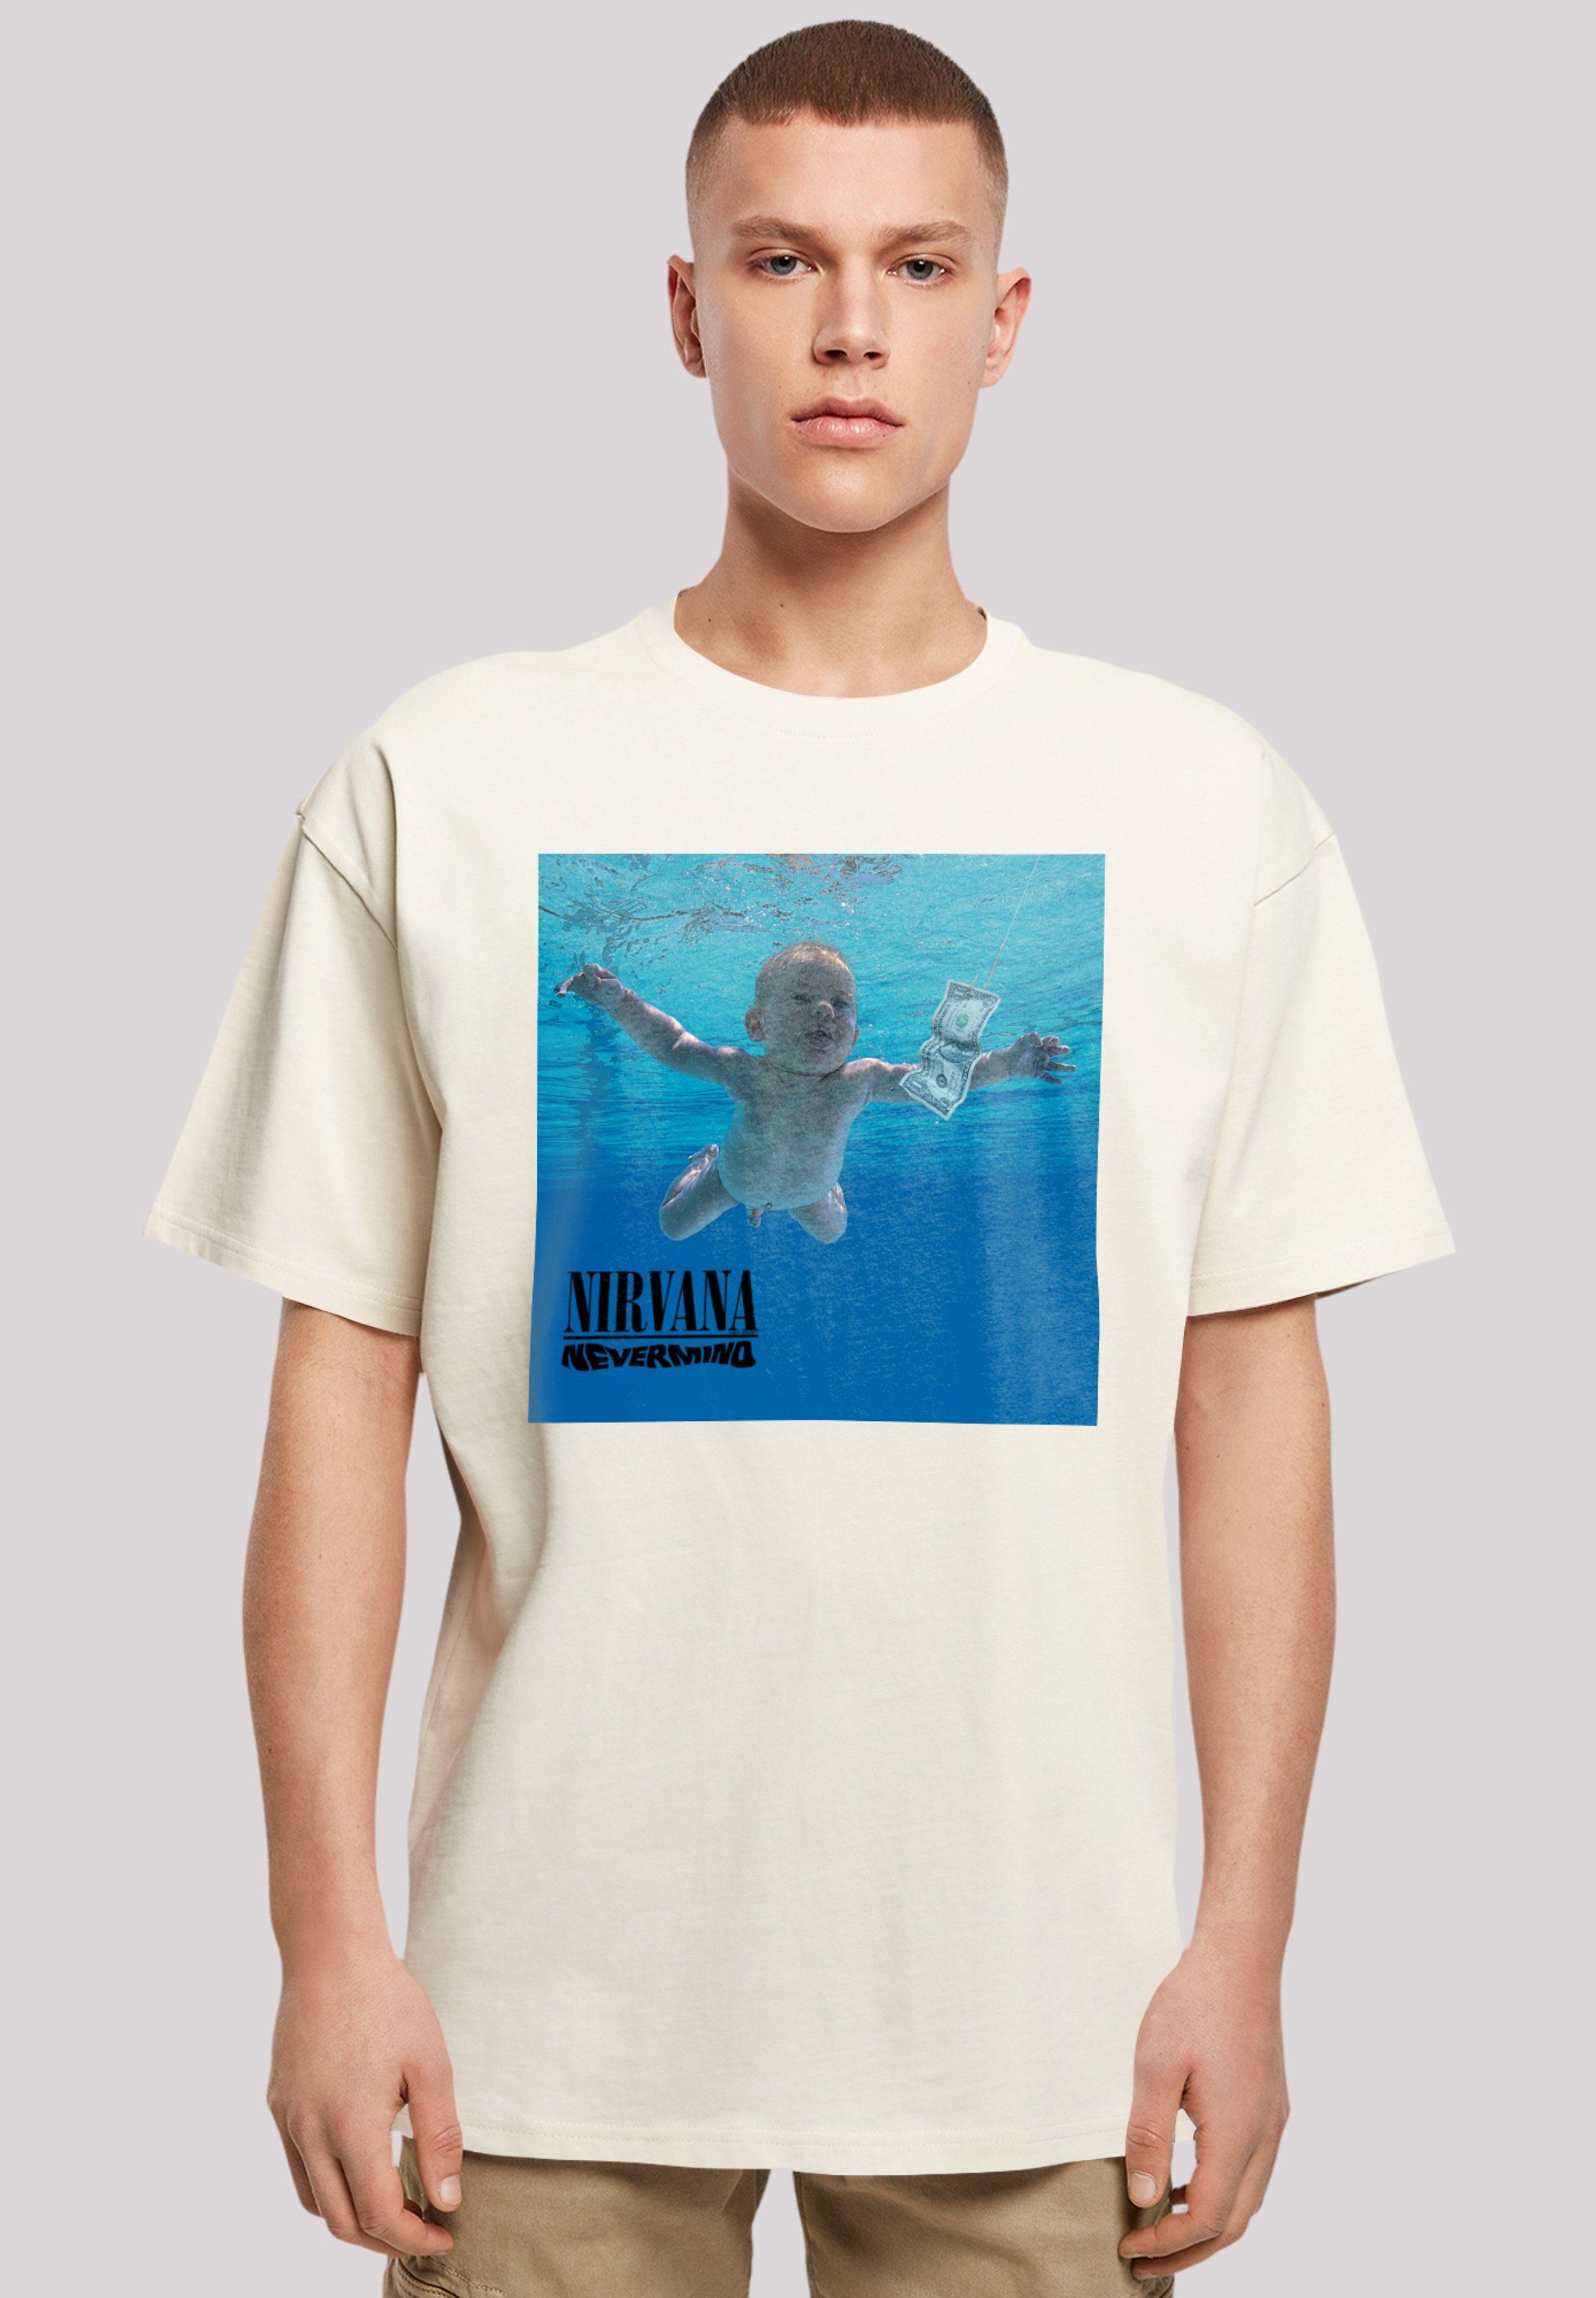 F4NT4STIC T-Shirt Nirvana Rock Band Nevermind Album Premium Qualität sand